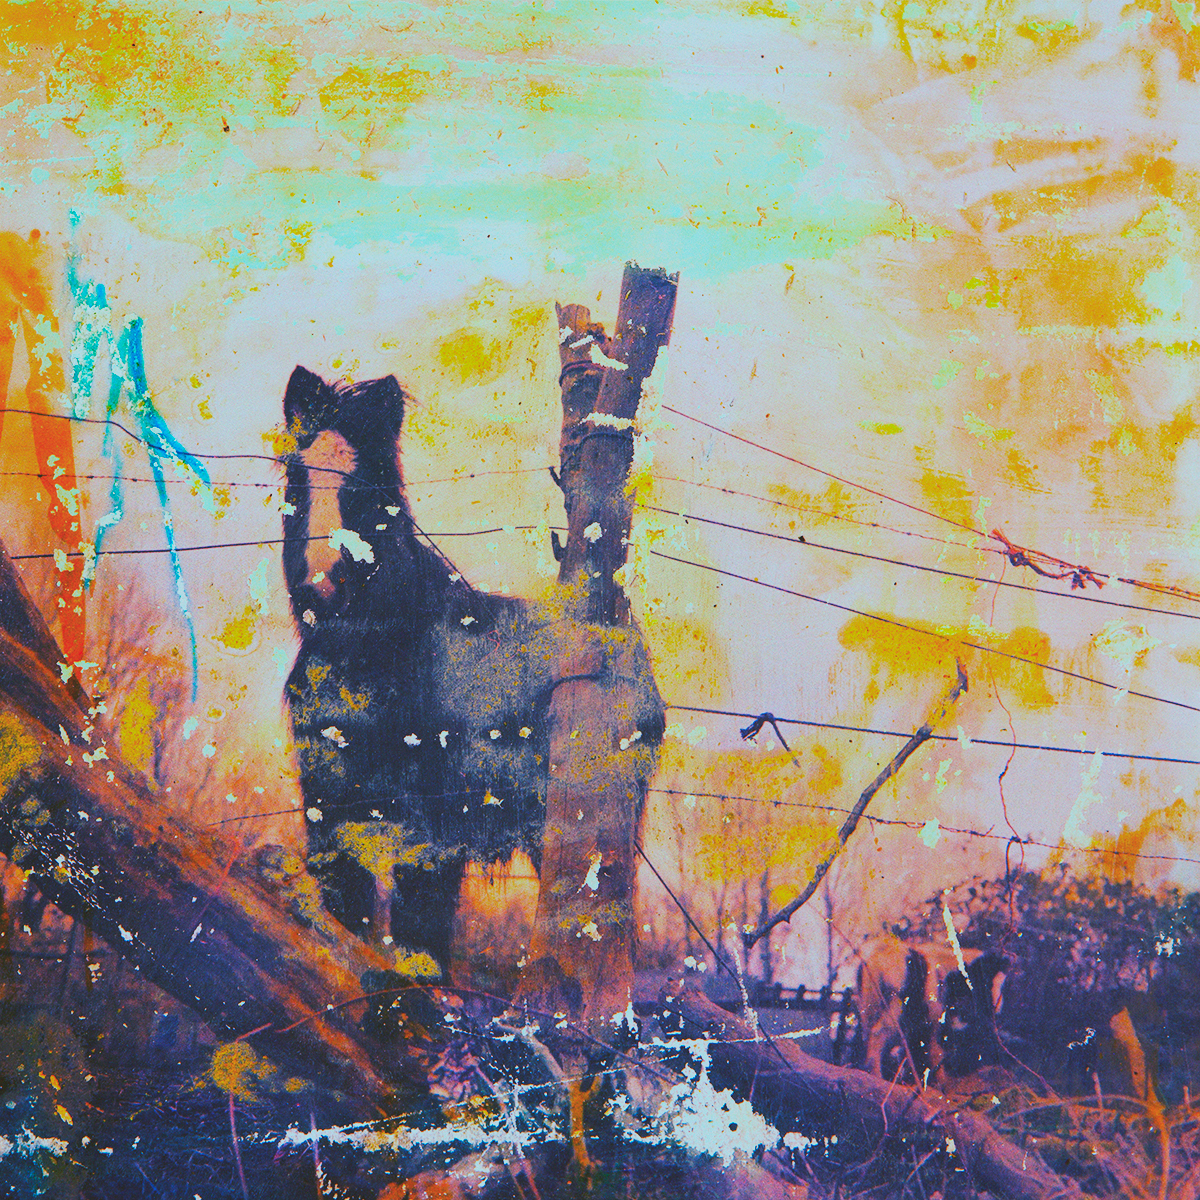 photos mediumformat analog FilmPhotography art artist mixedmedia manipulated Ambient color carousel